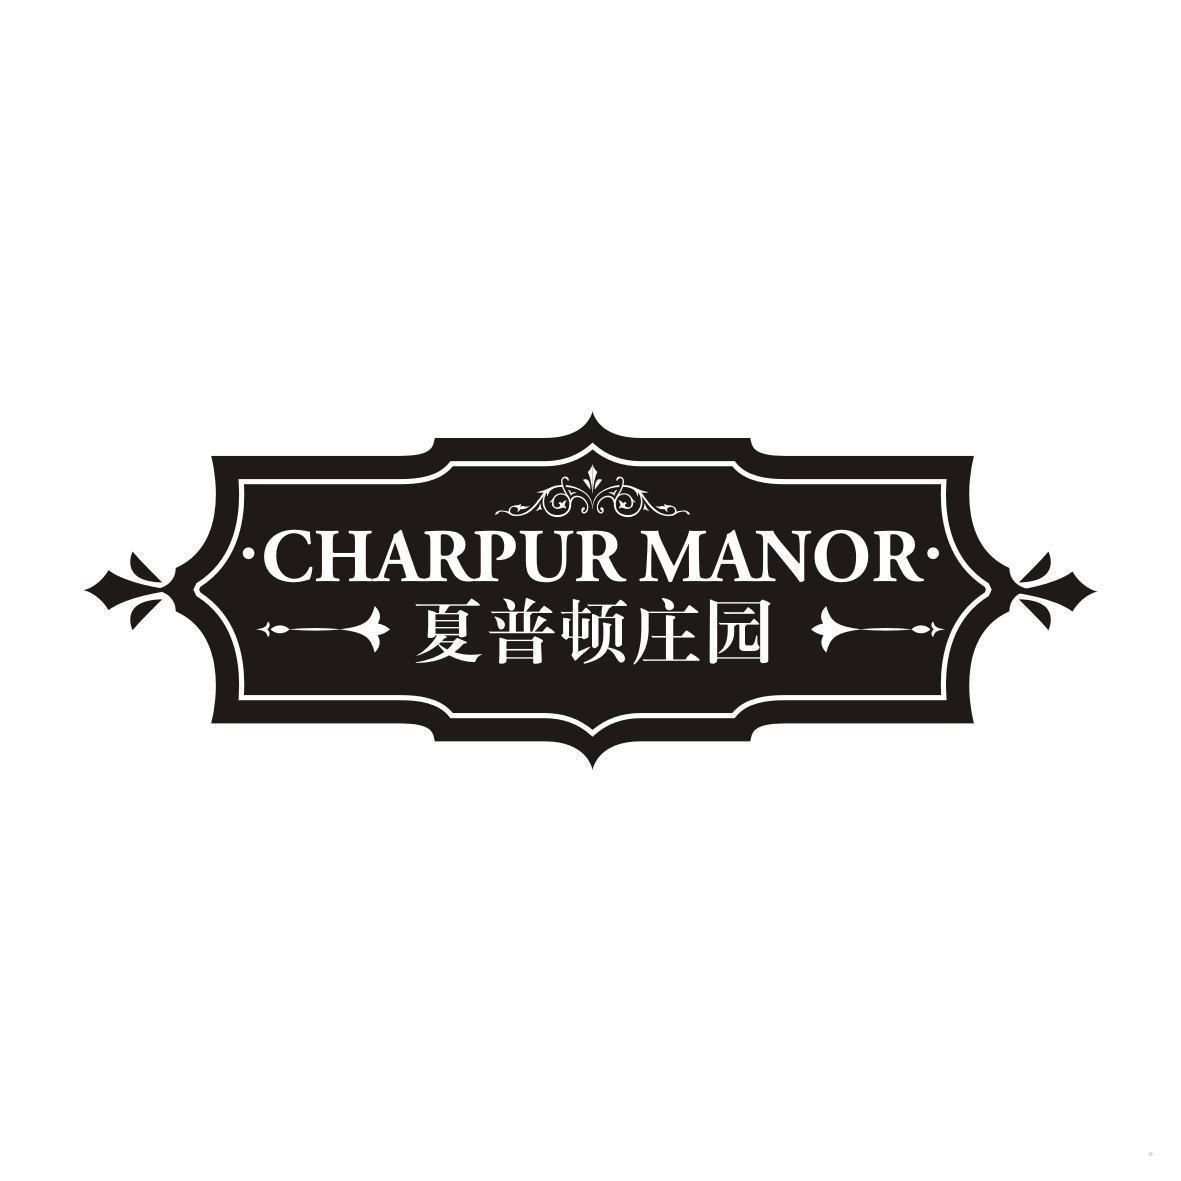 CHARPUR MANOR 夏普顿庄园